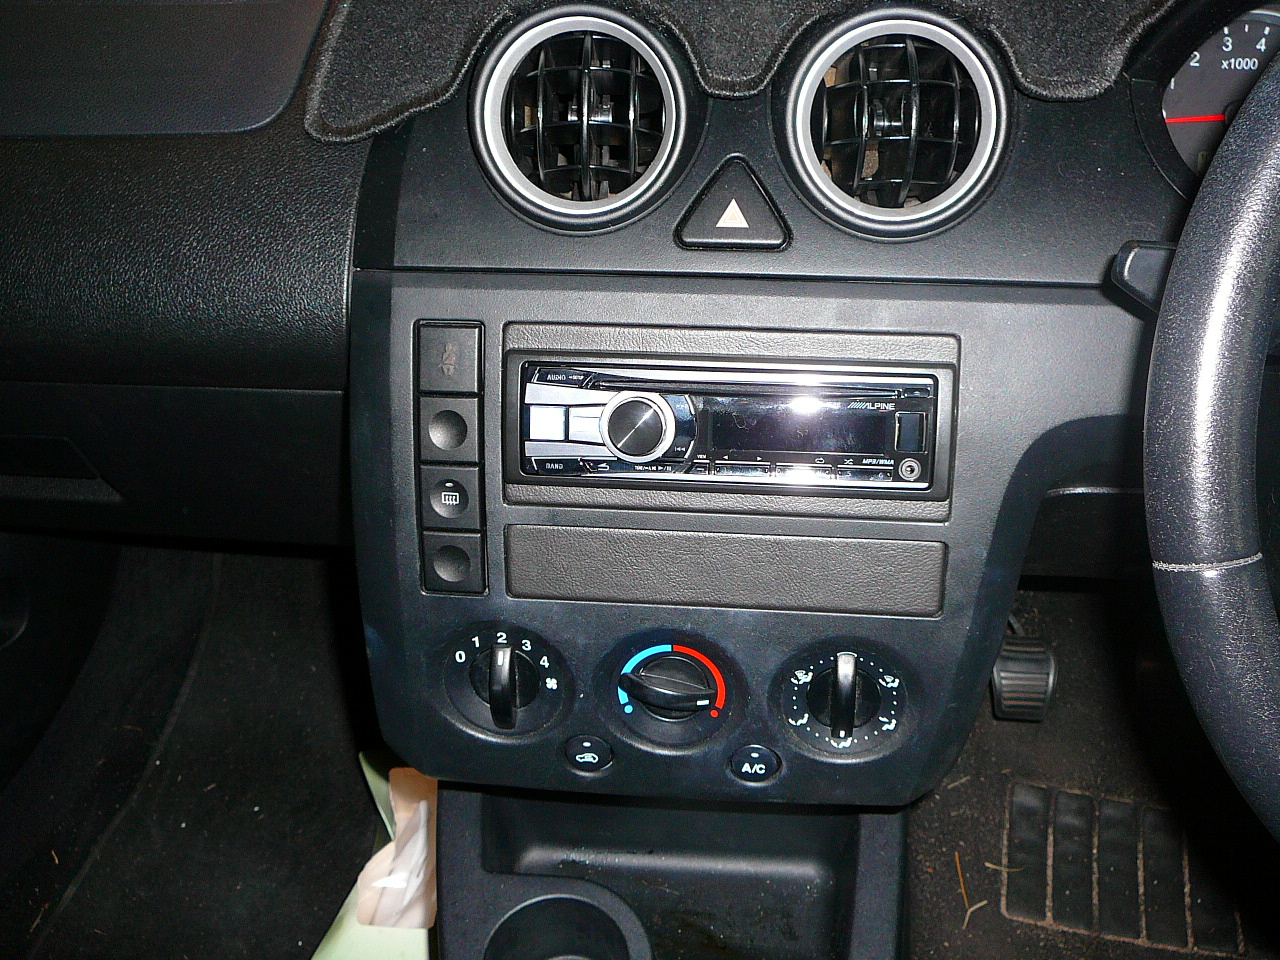 Ford Fiesta, Alpine USB Cd Radio & Dash Fascia